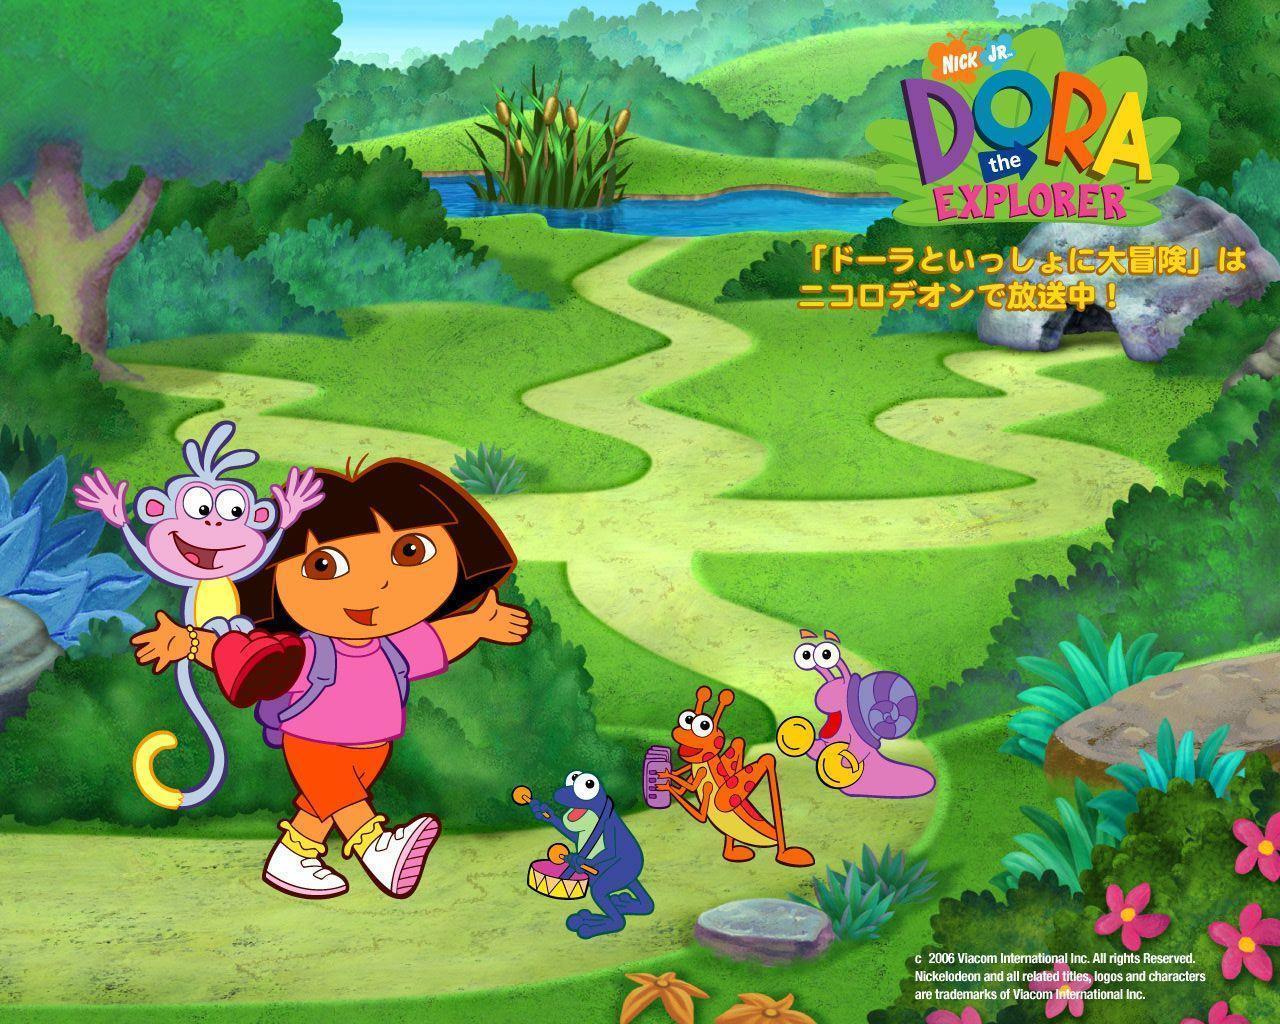 Dora the Explorer Wallpaper